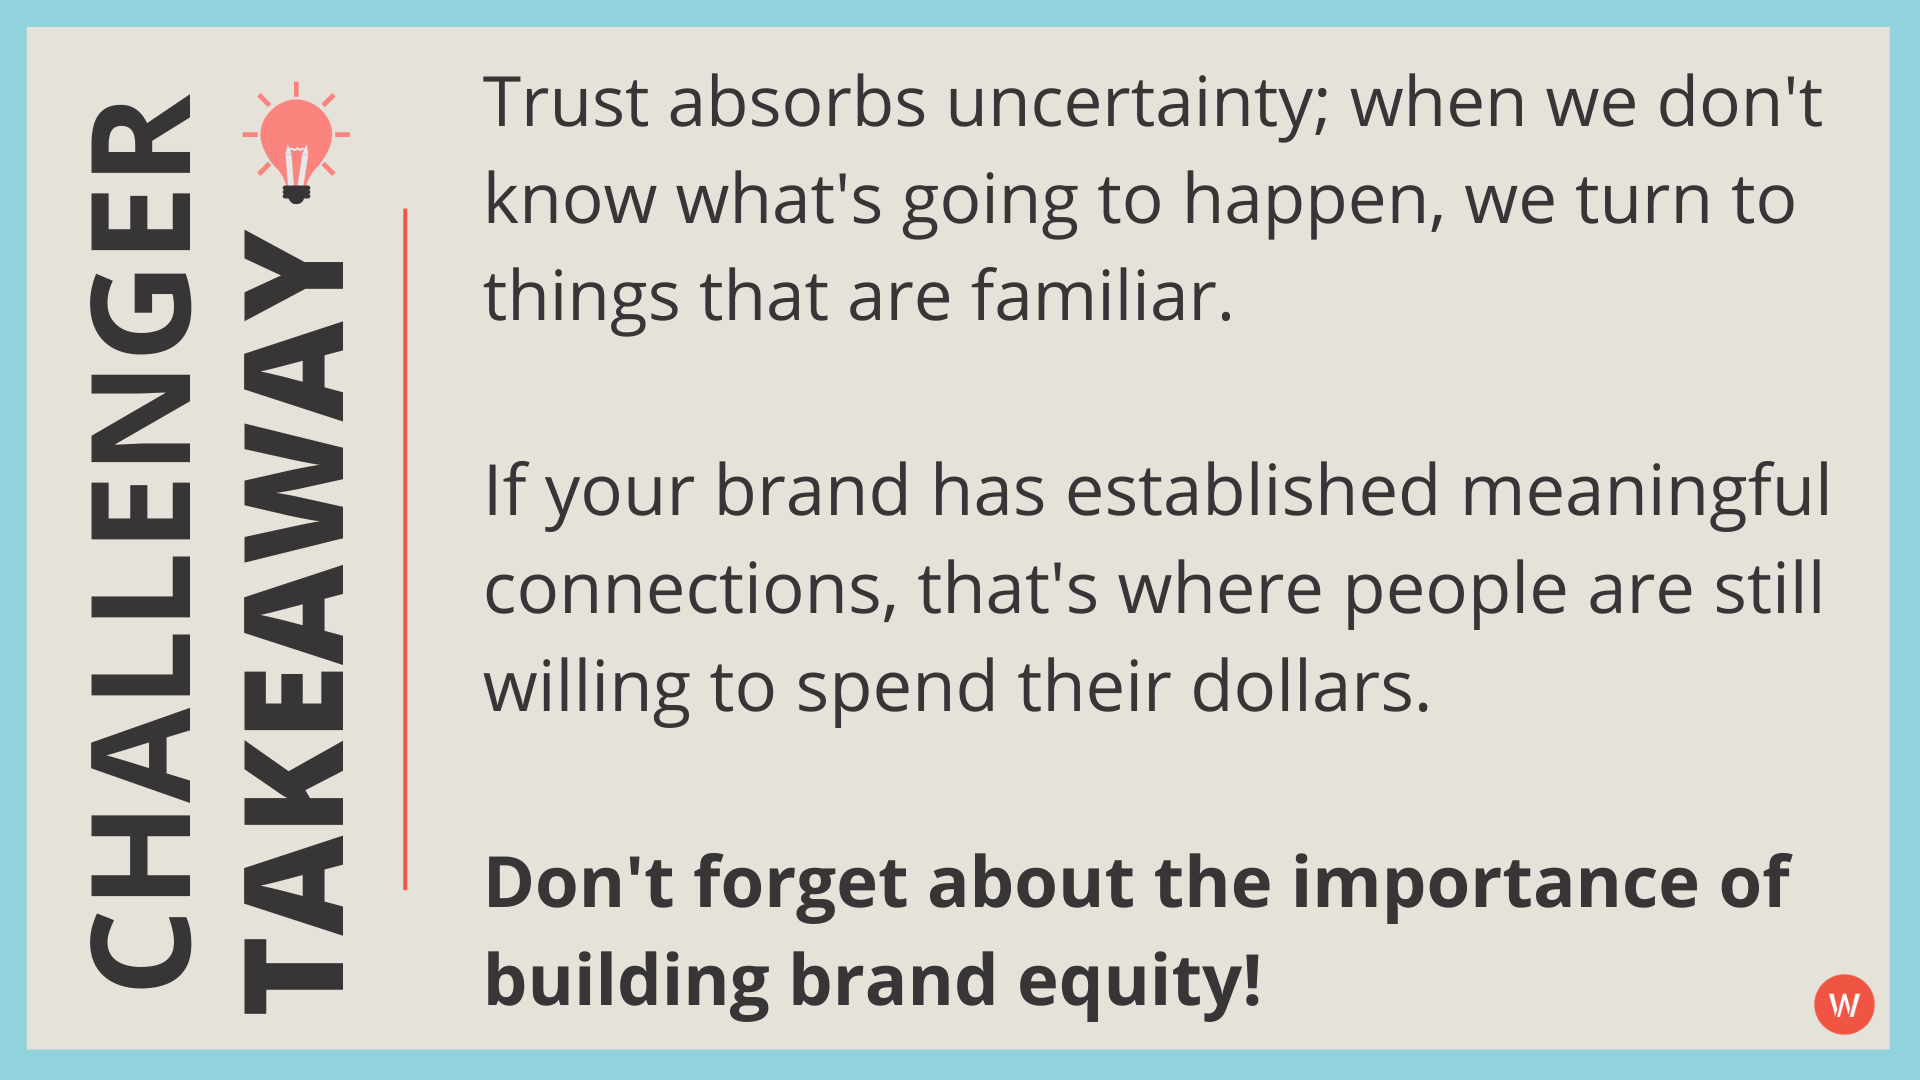 Build brand equity through trust